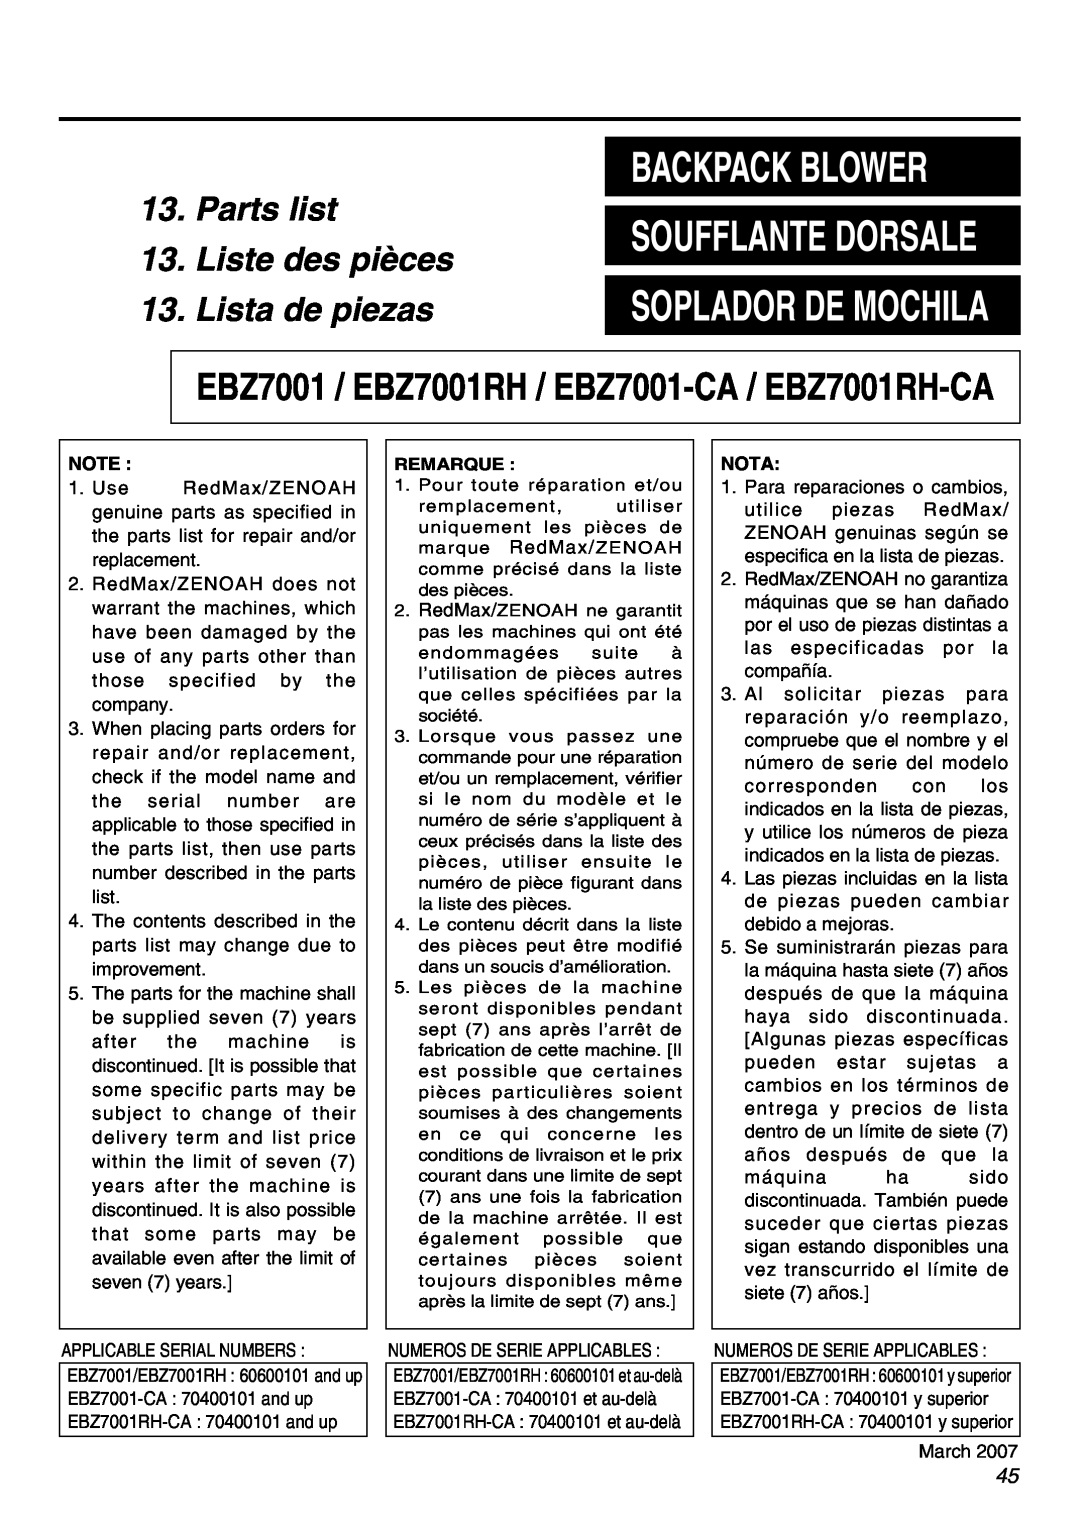 RedMax EBZ7001-CA, EBZ7001RH-CA manual Backpack Blower, Soufflante Dorsale, Soplador De Mochila 